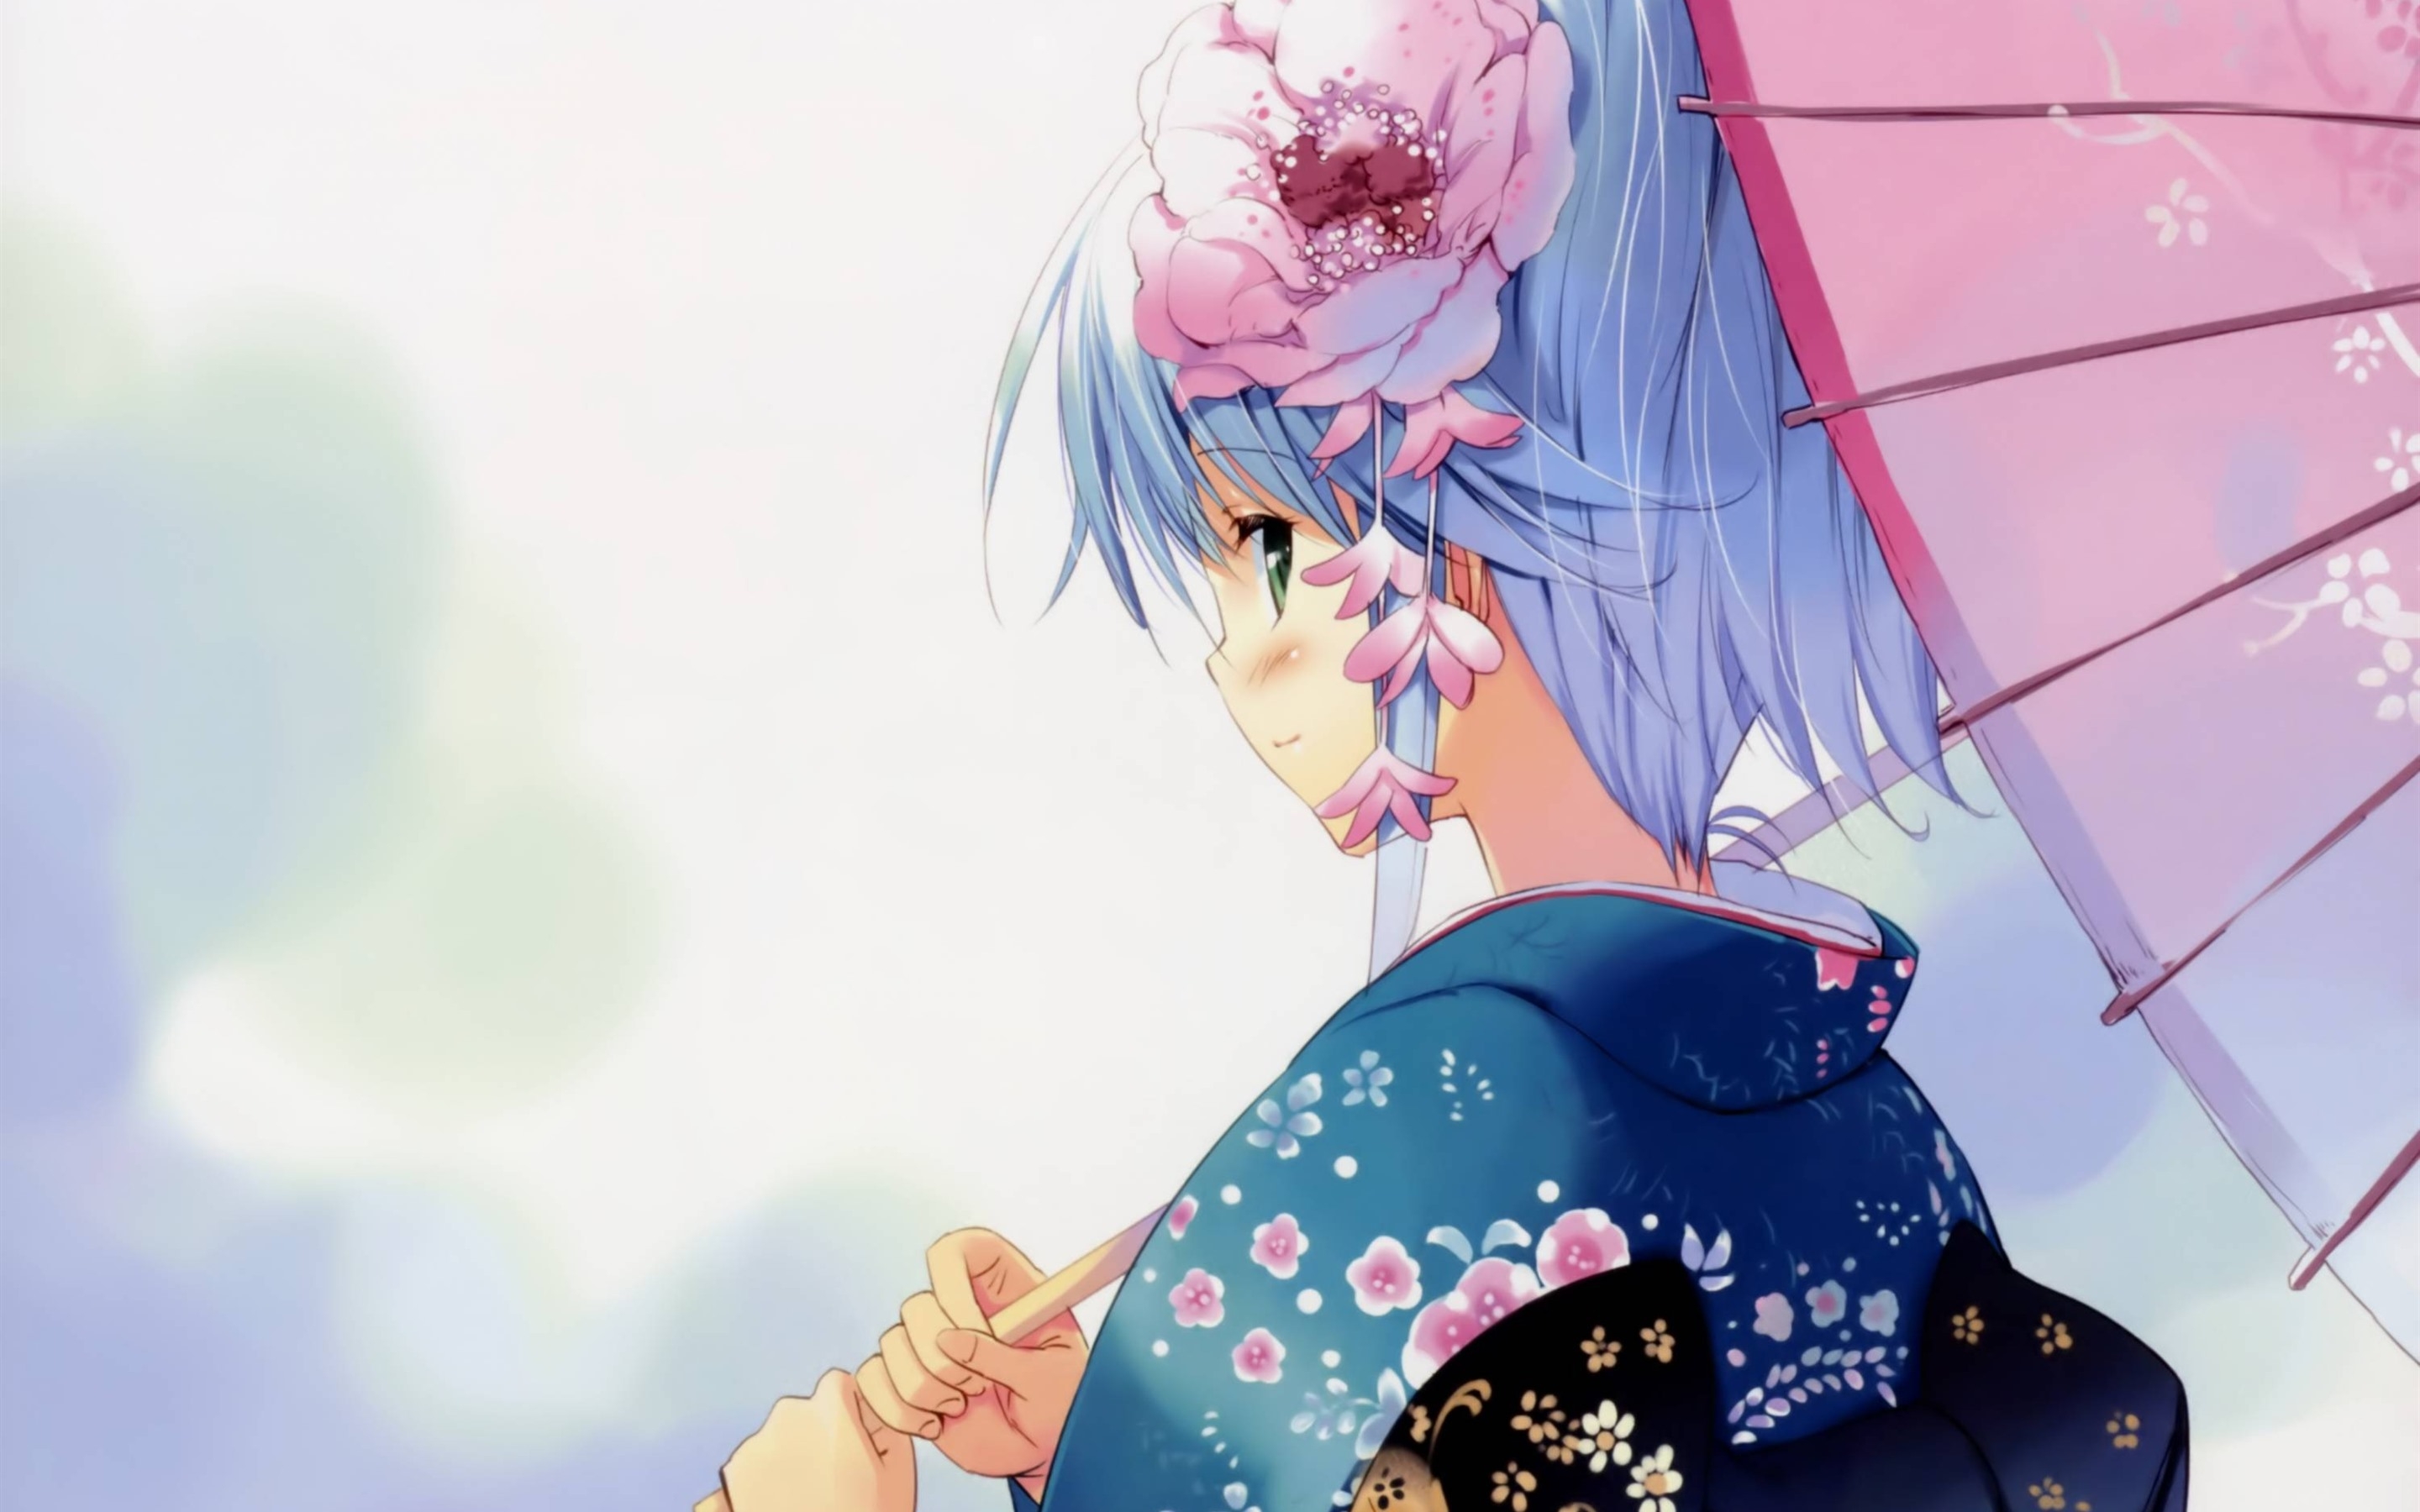 6. Anime Girl with Aqua Hair - wide 4